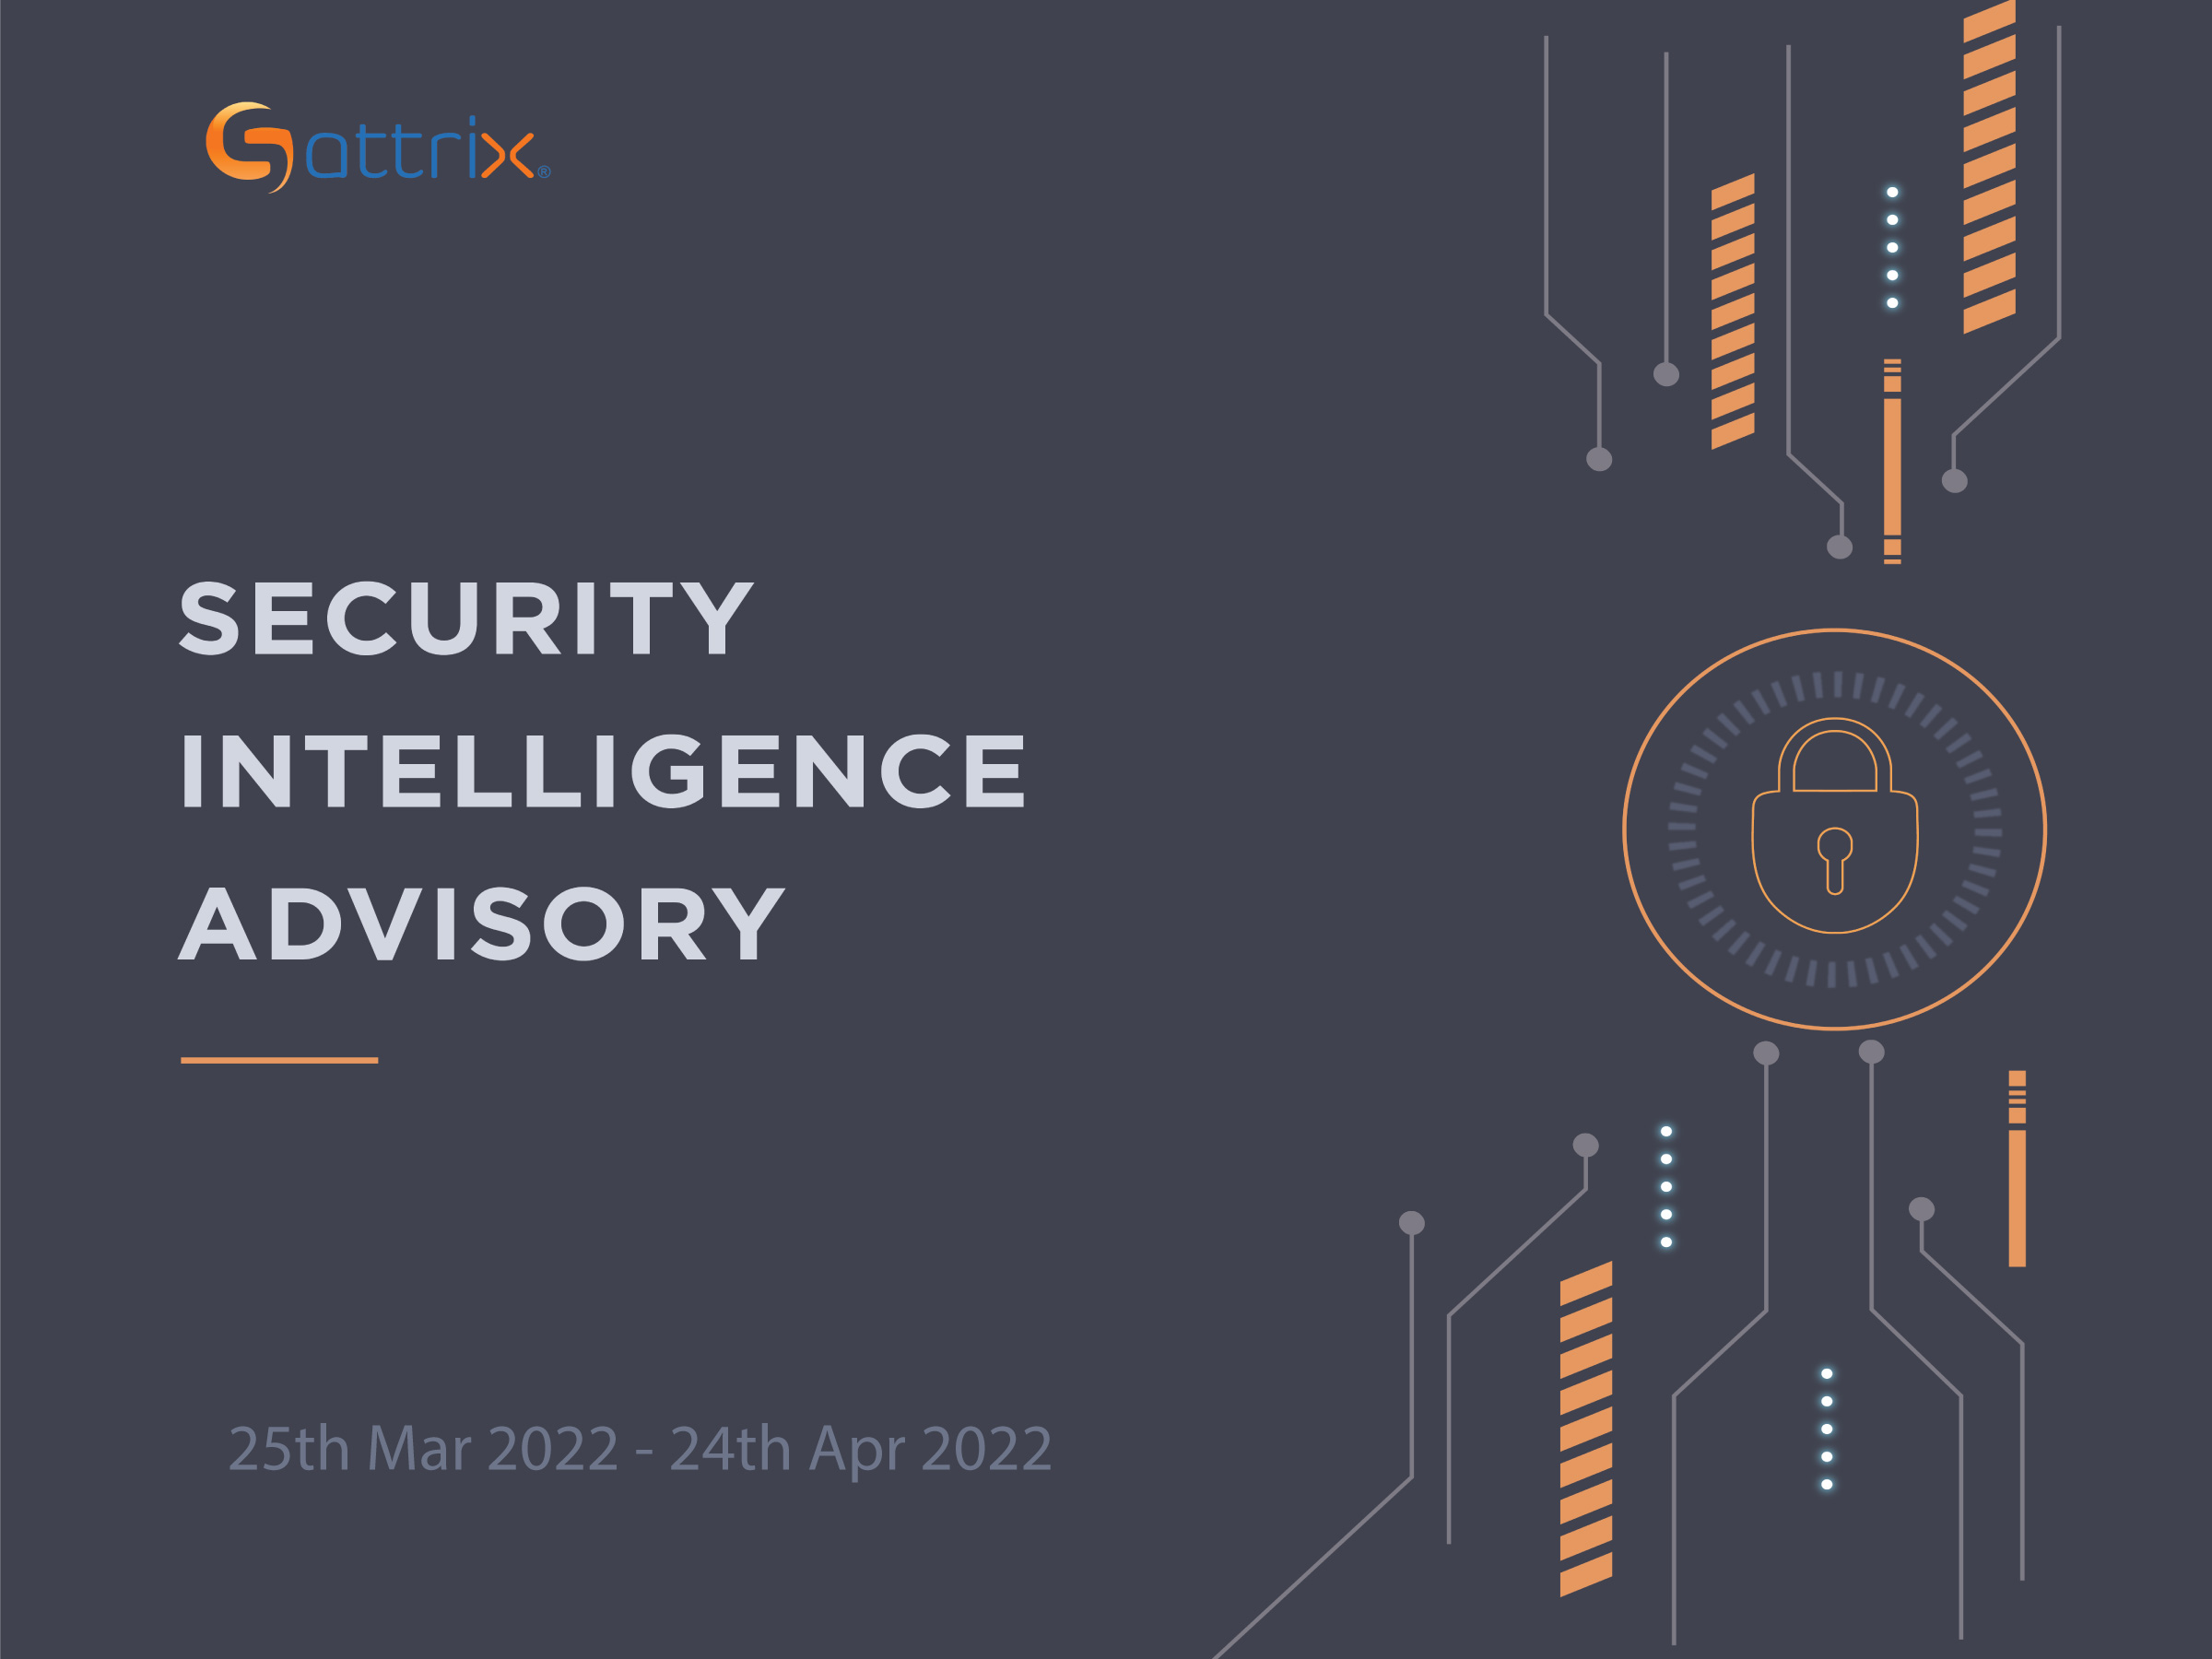 Vulnerability Research Advisory 25th Mar to 24th Apr 2022